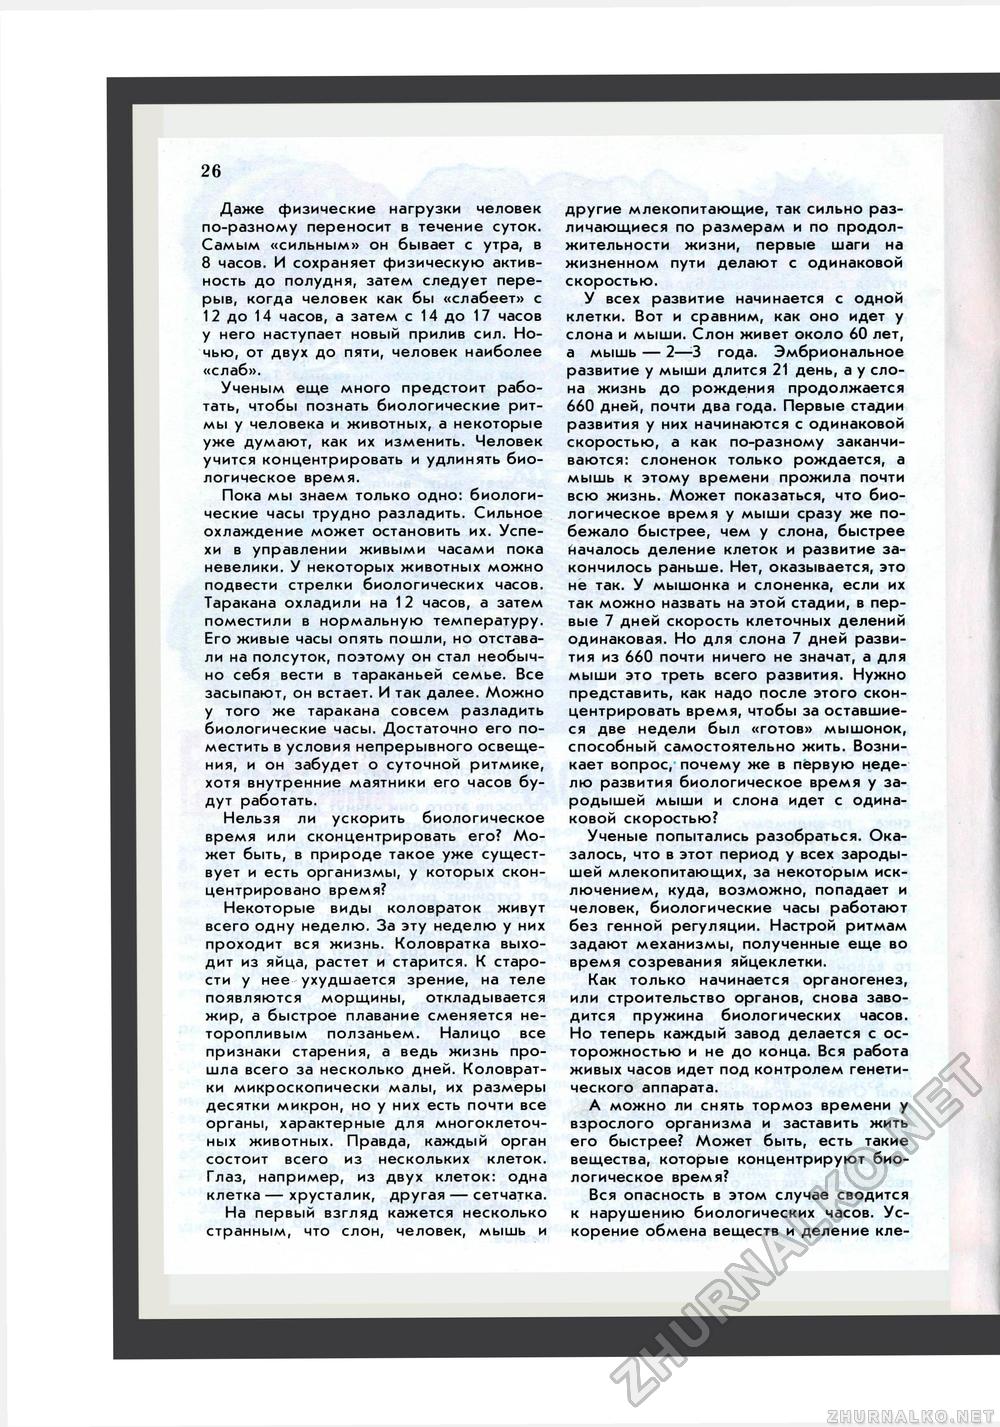 Юный Натуралист 1986-11, страница 28